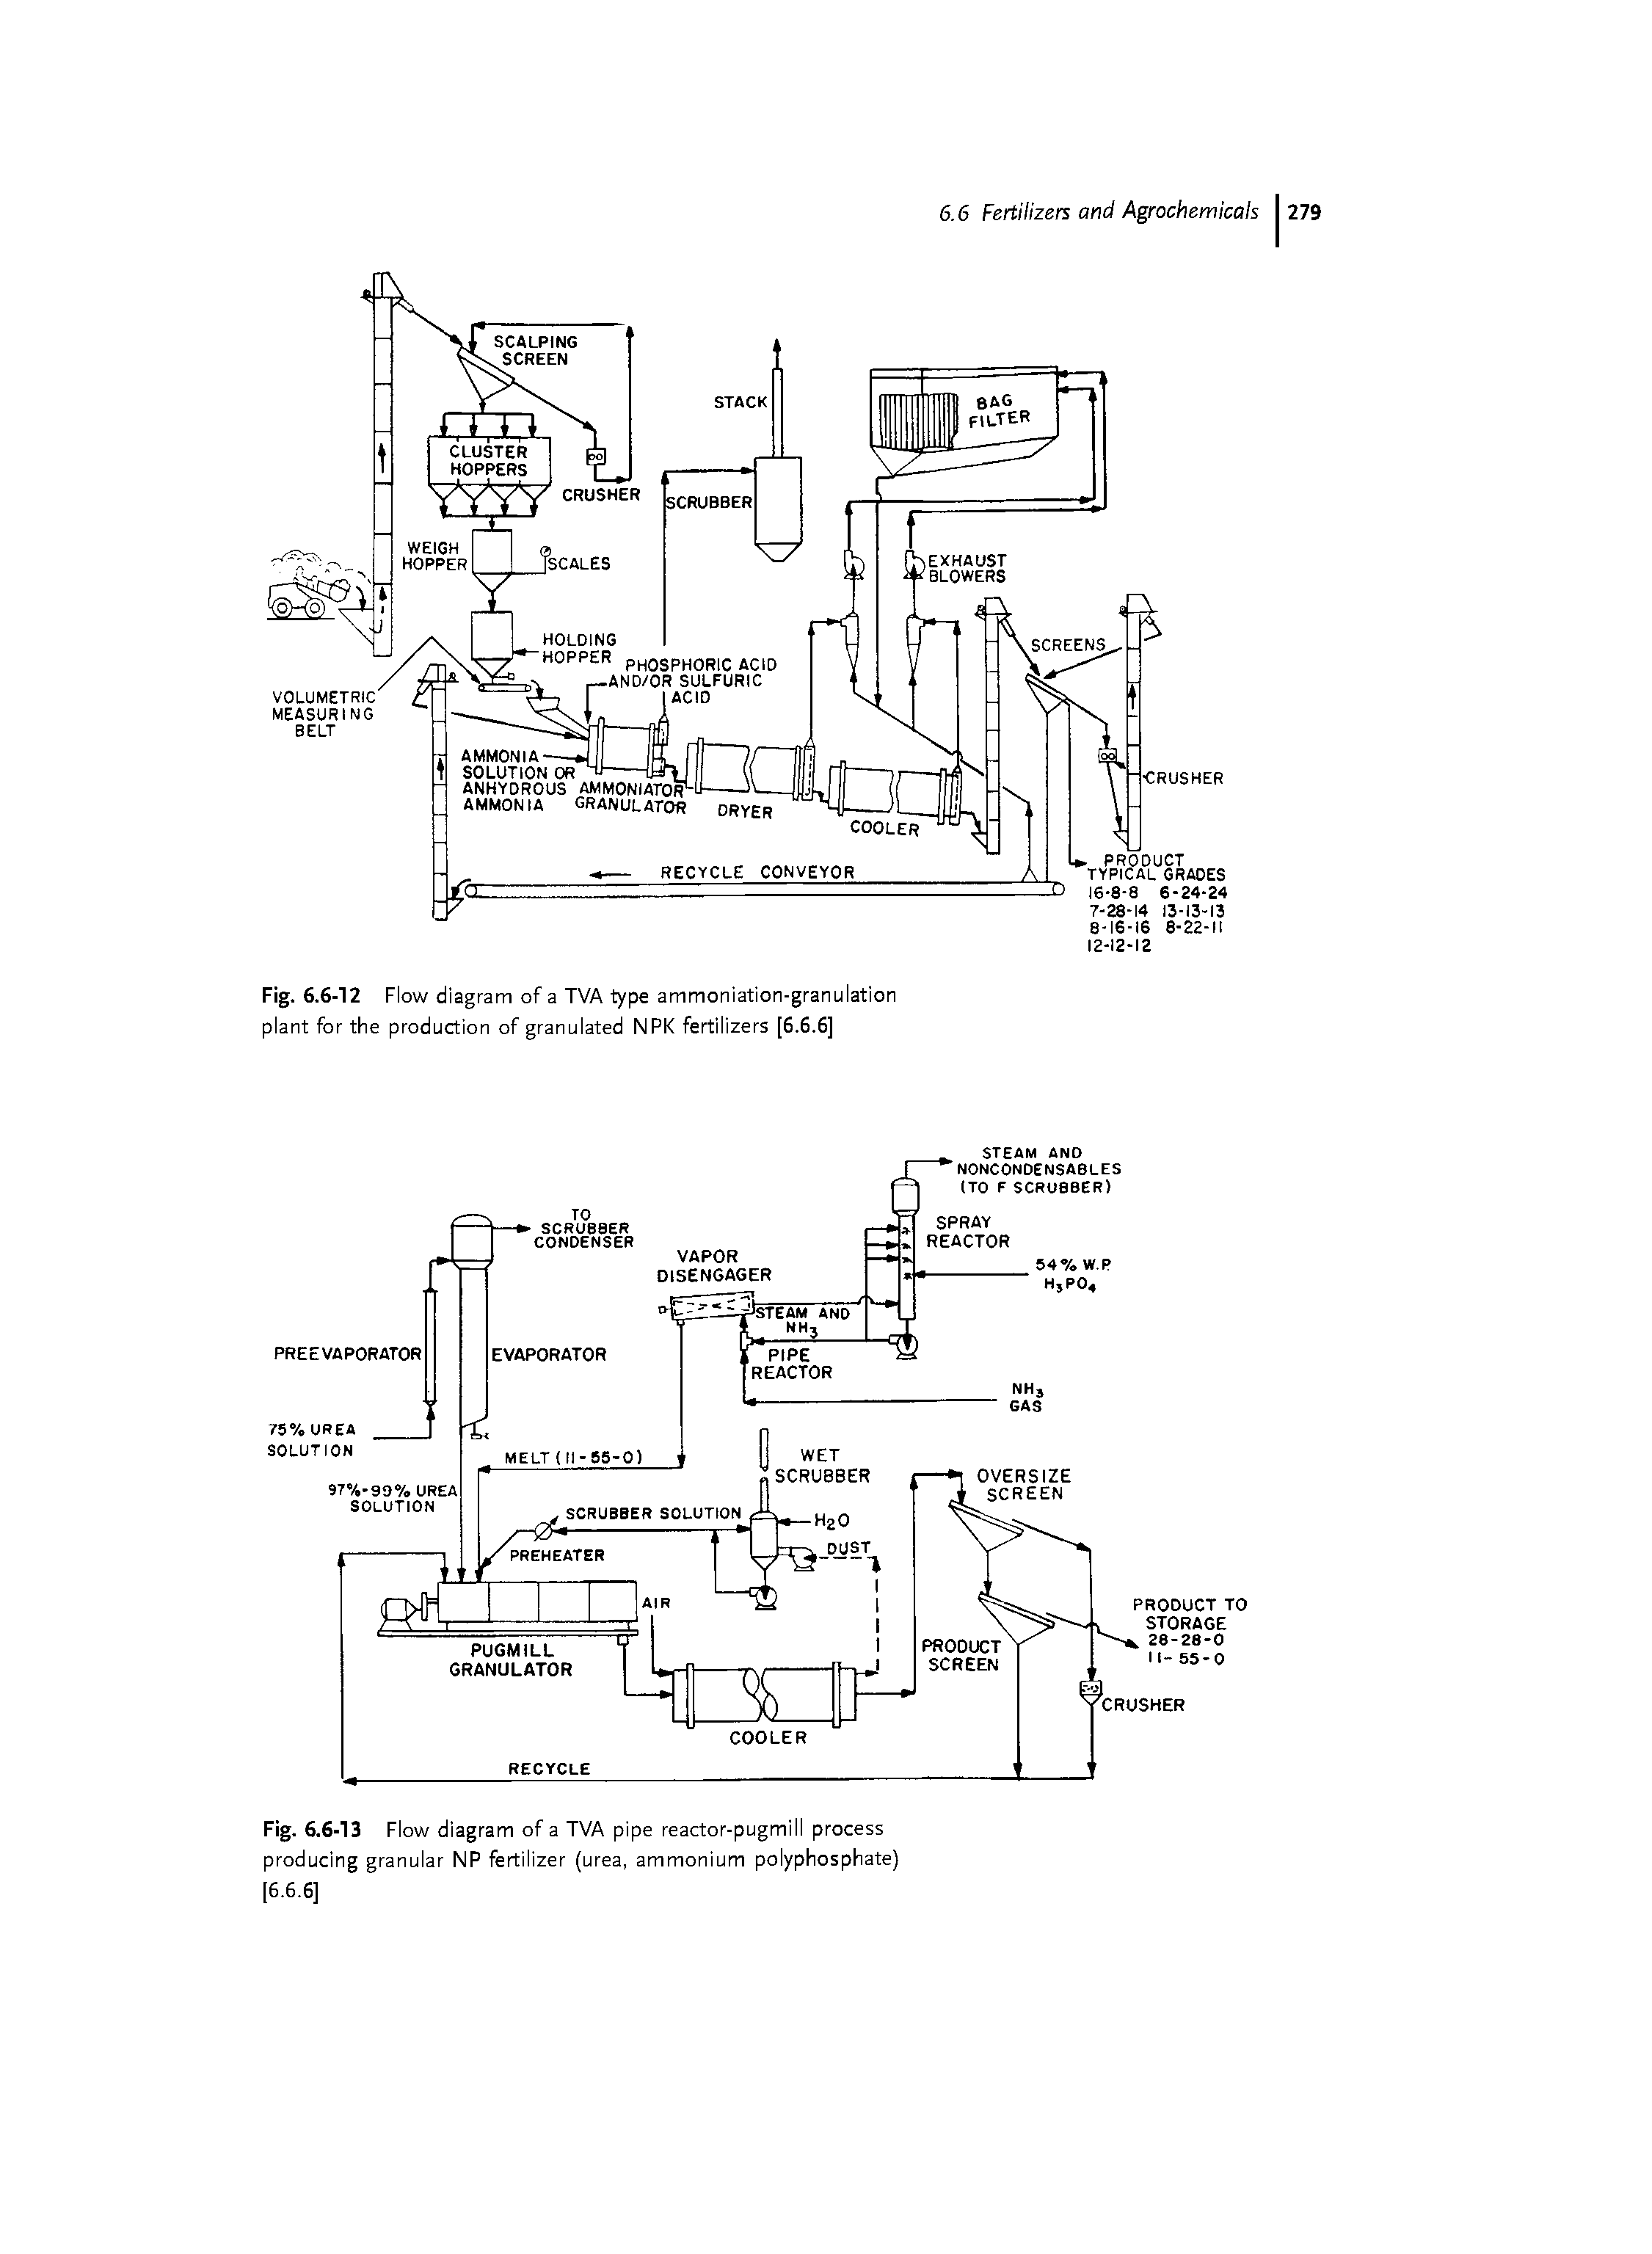 Fig. 6.6-13 Flow diagram of a TVA pipe reactor-pugmill process producing granular NP fertilizer (urea, ammonium polyphosphate) [6.6.6]...